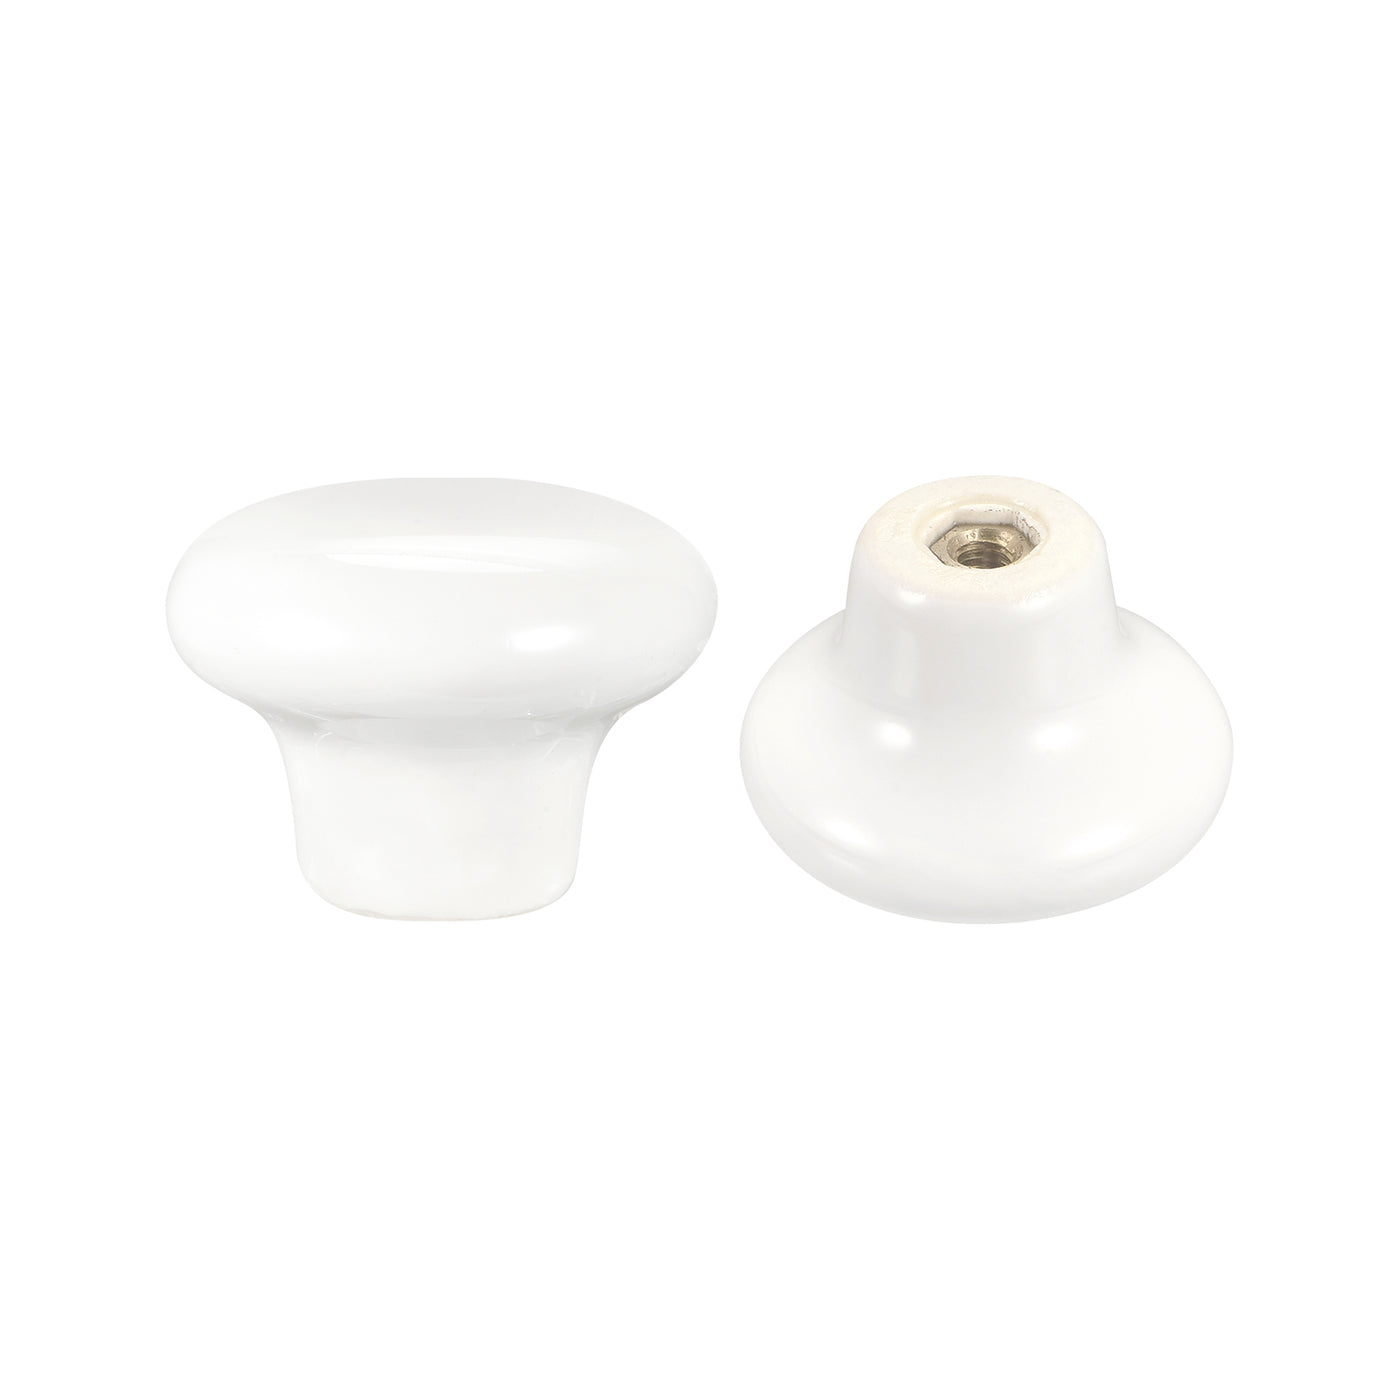 uxcell Uxcell Ceramic Drawer Knobs 10pcs Mushroom Shape Pulls 0.94"x1.26" for Dresser(White)